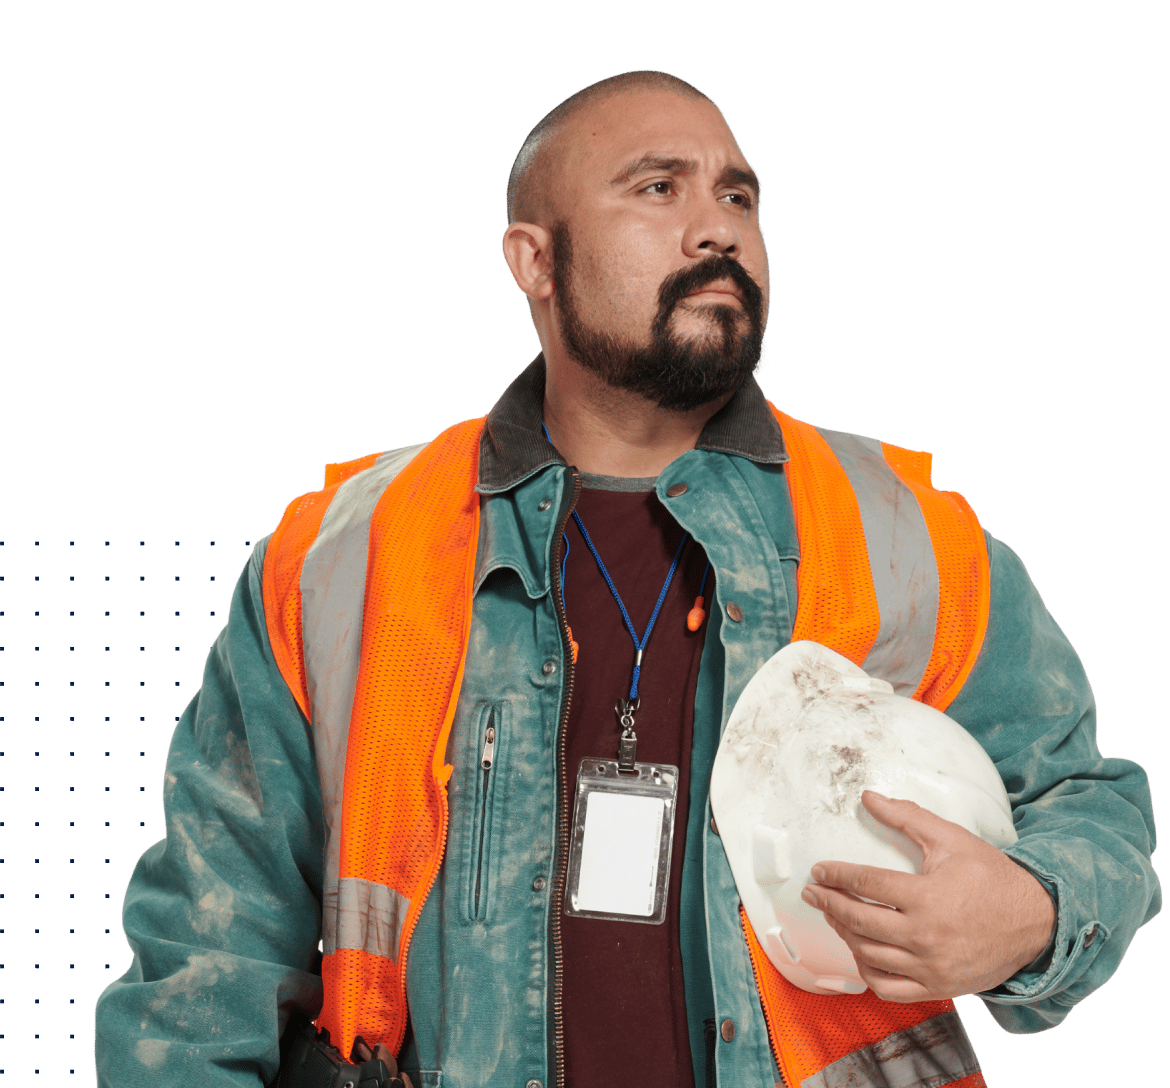 Man in construction PPE holding helmet